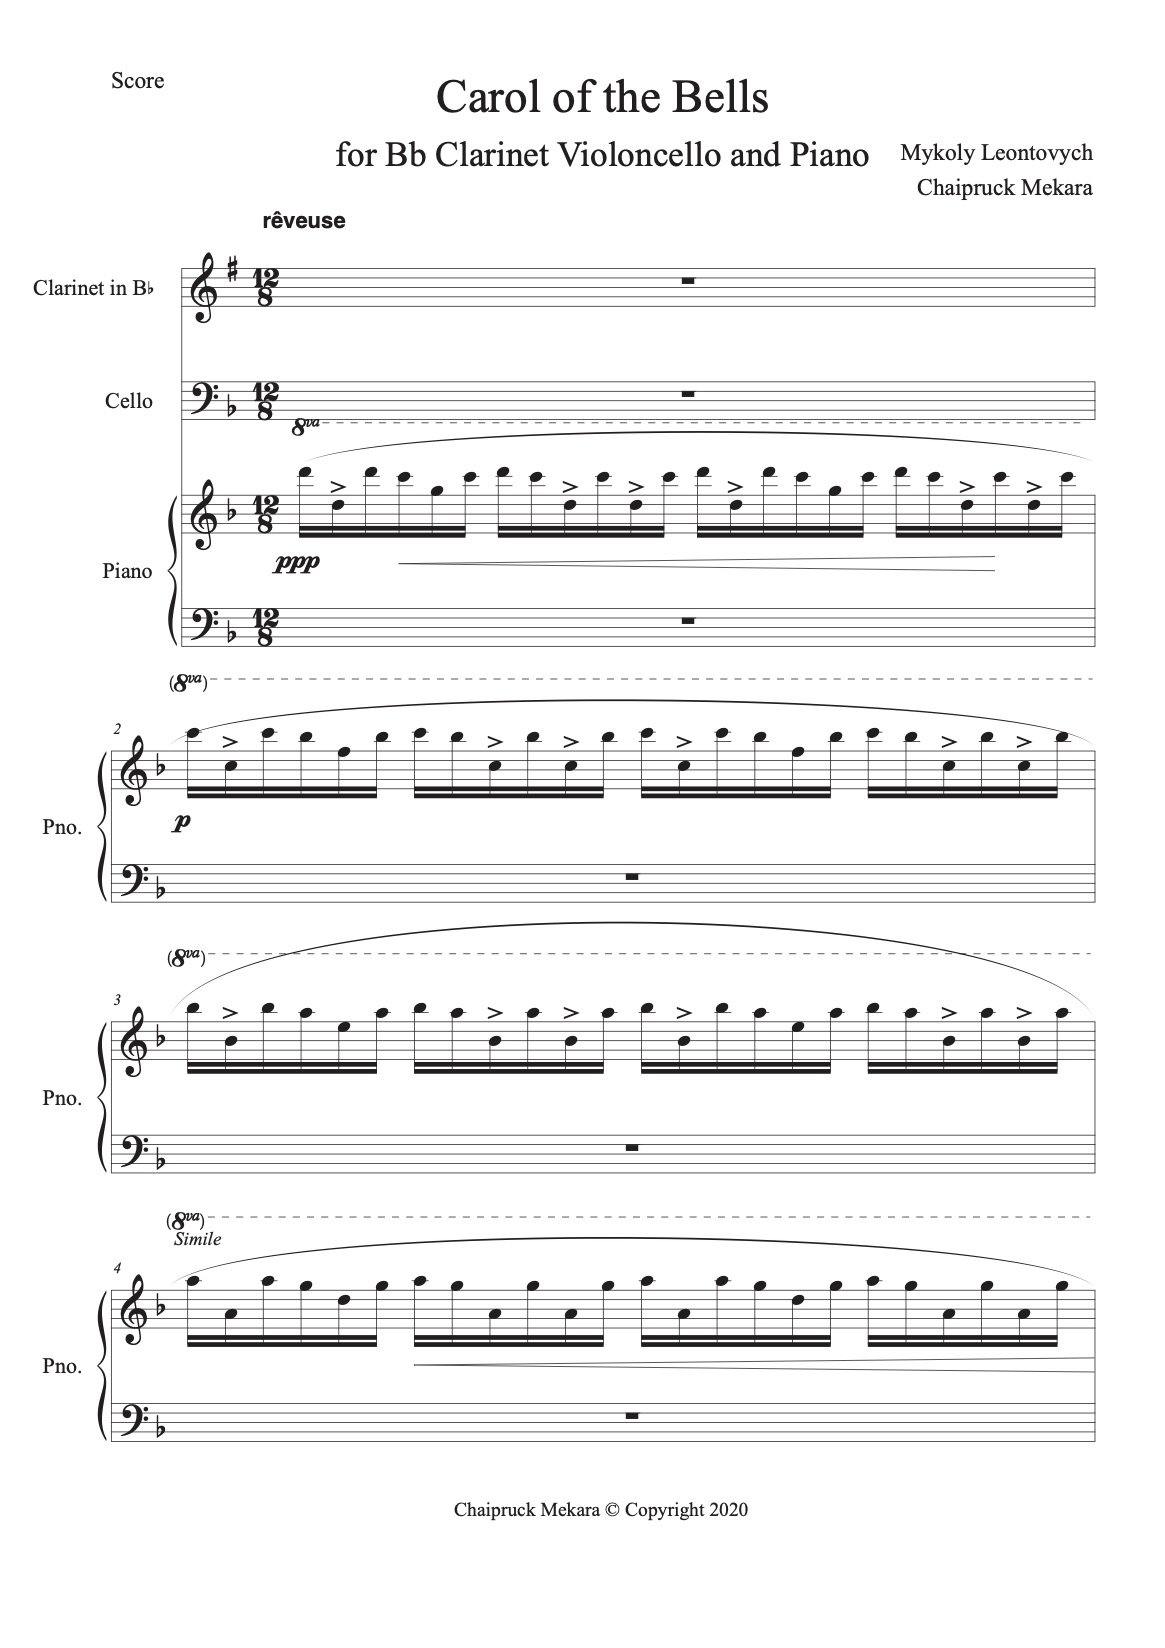 Audio Mp3 - Piano part for Carol of the Bells - ChaipruckMekara